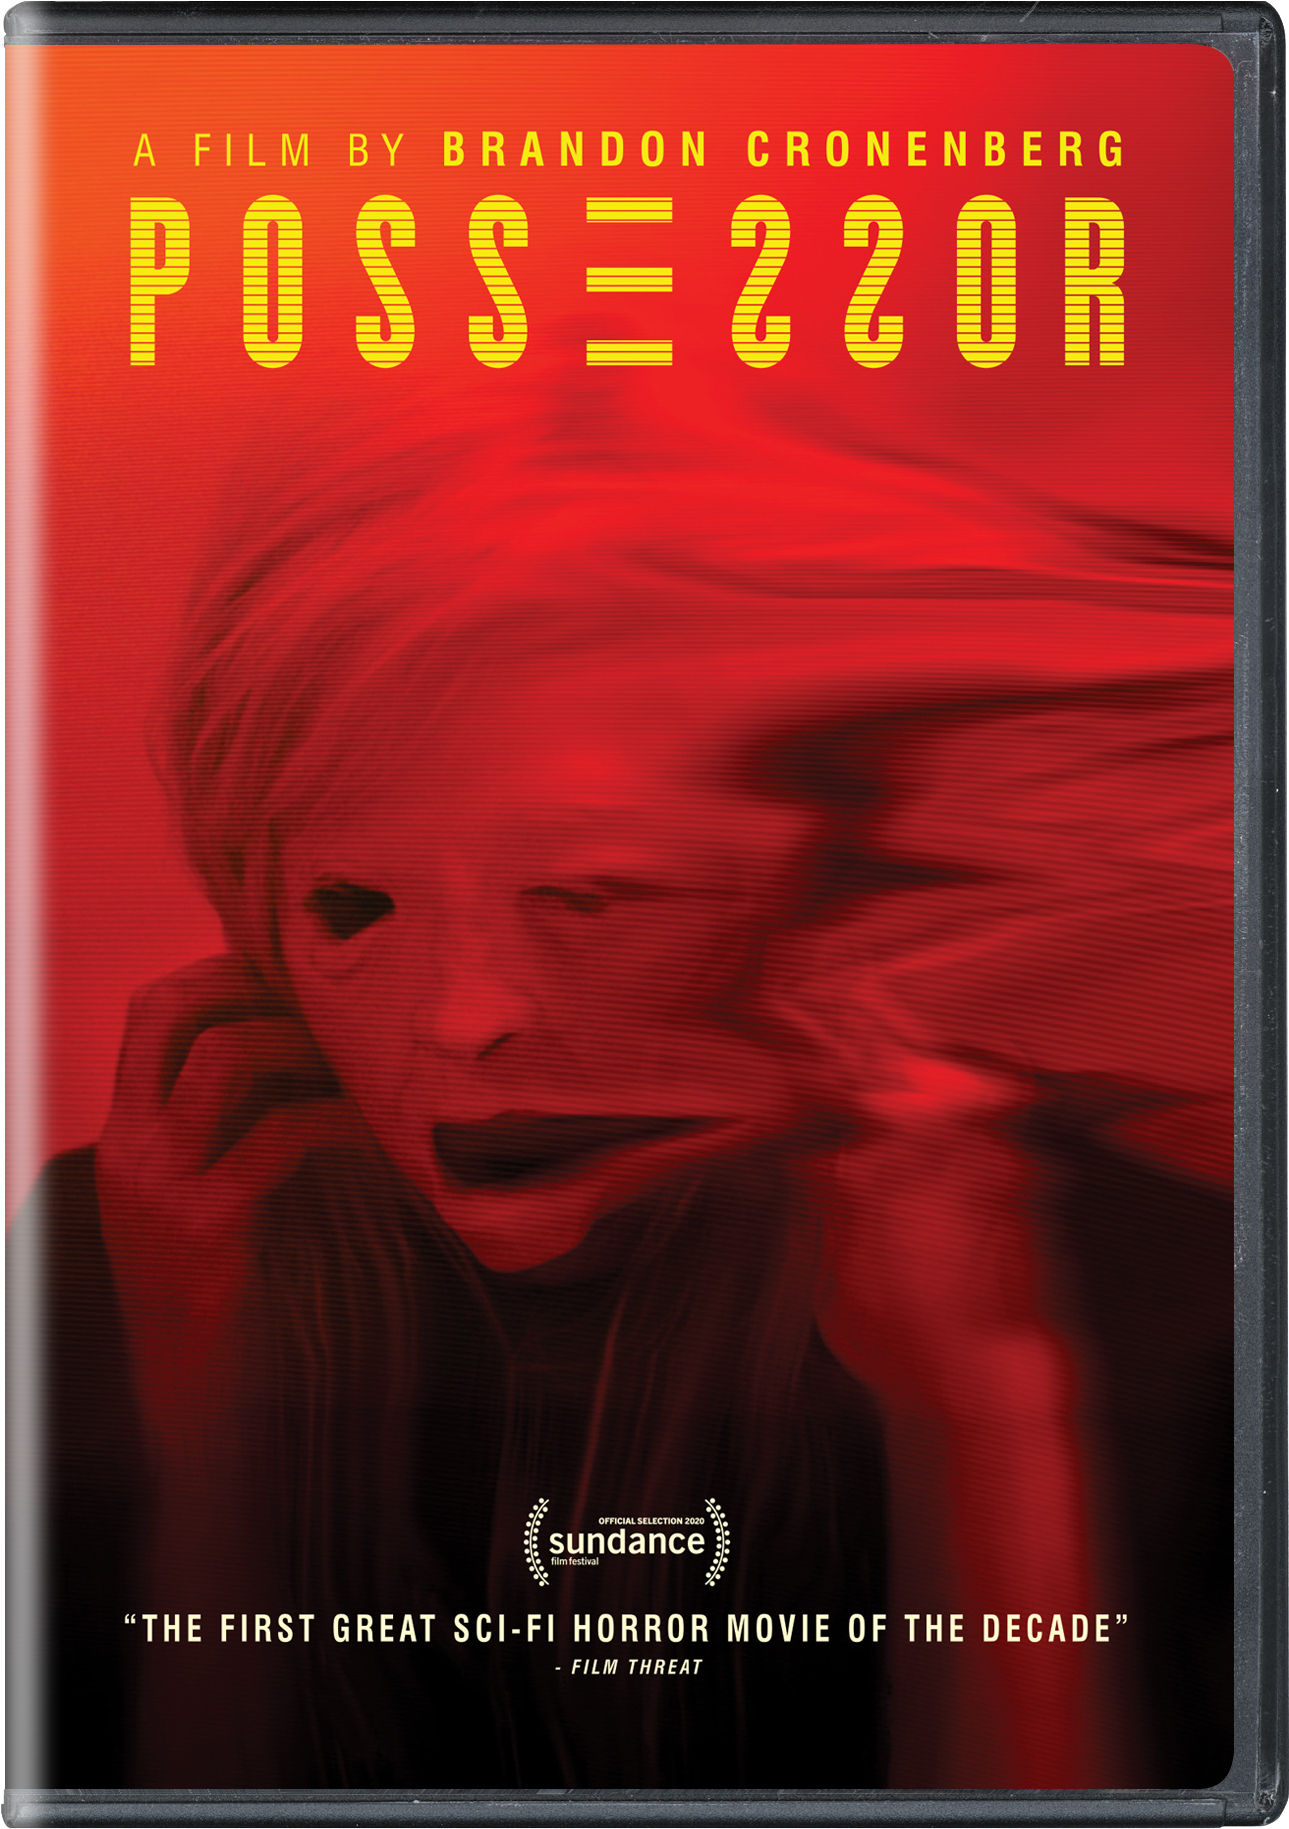 Possessor - DVD [ 2020 ]  - Sci Fi Movies On DVD - Movies On GRUV